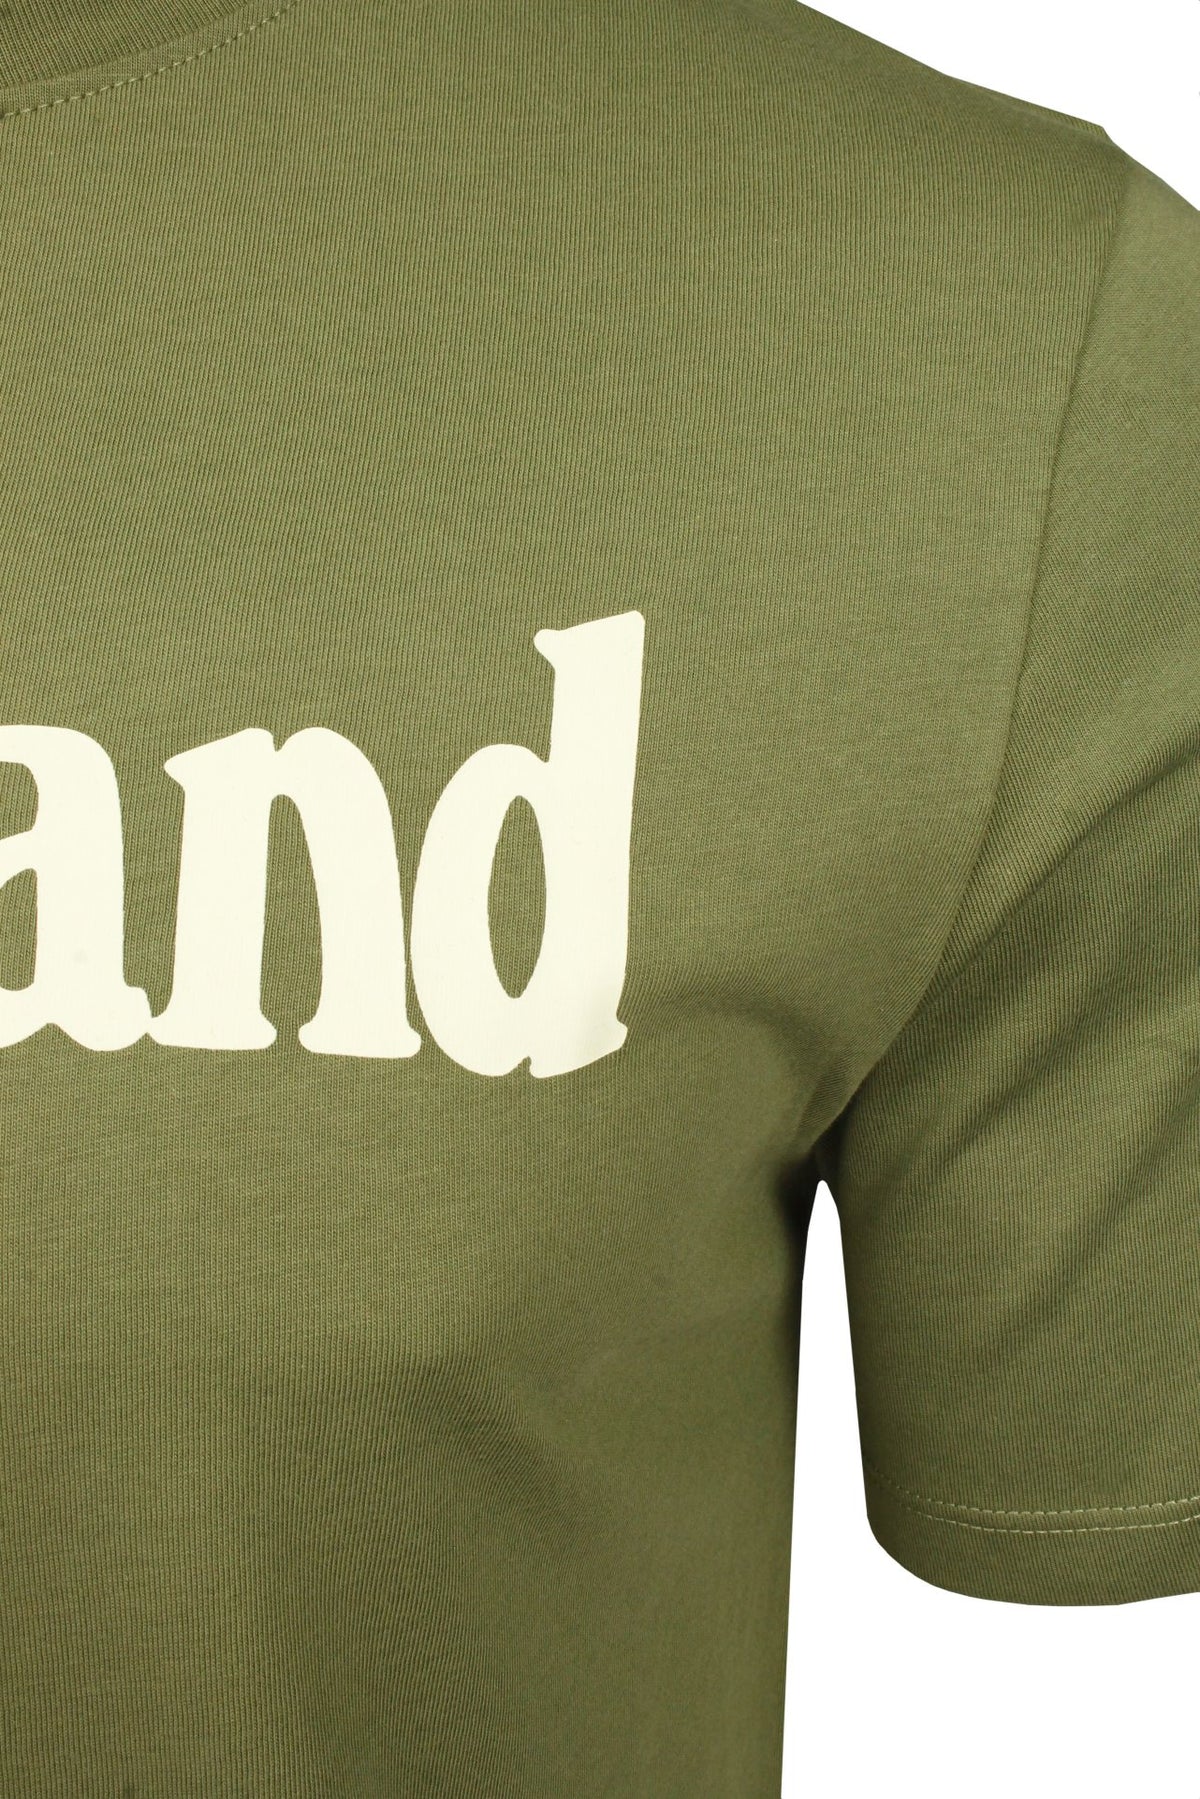 Timberland Mens Jersey T-Shirt 'Kennebec River Linea Tee', 02, Tb0A2C31, Cassel Earth